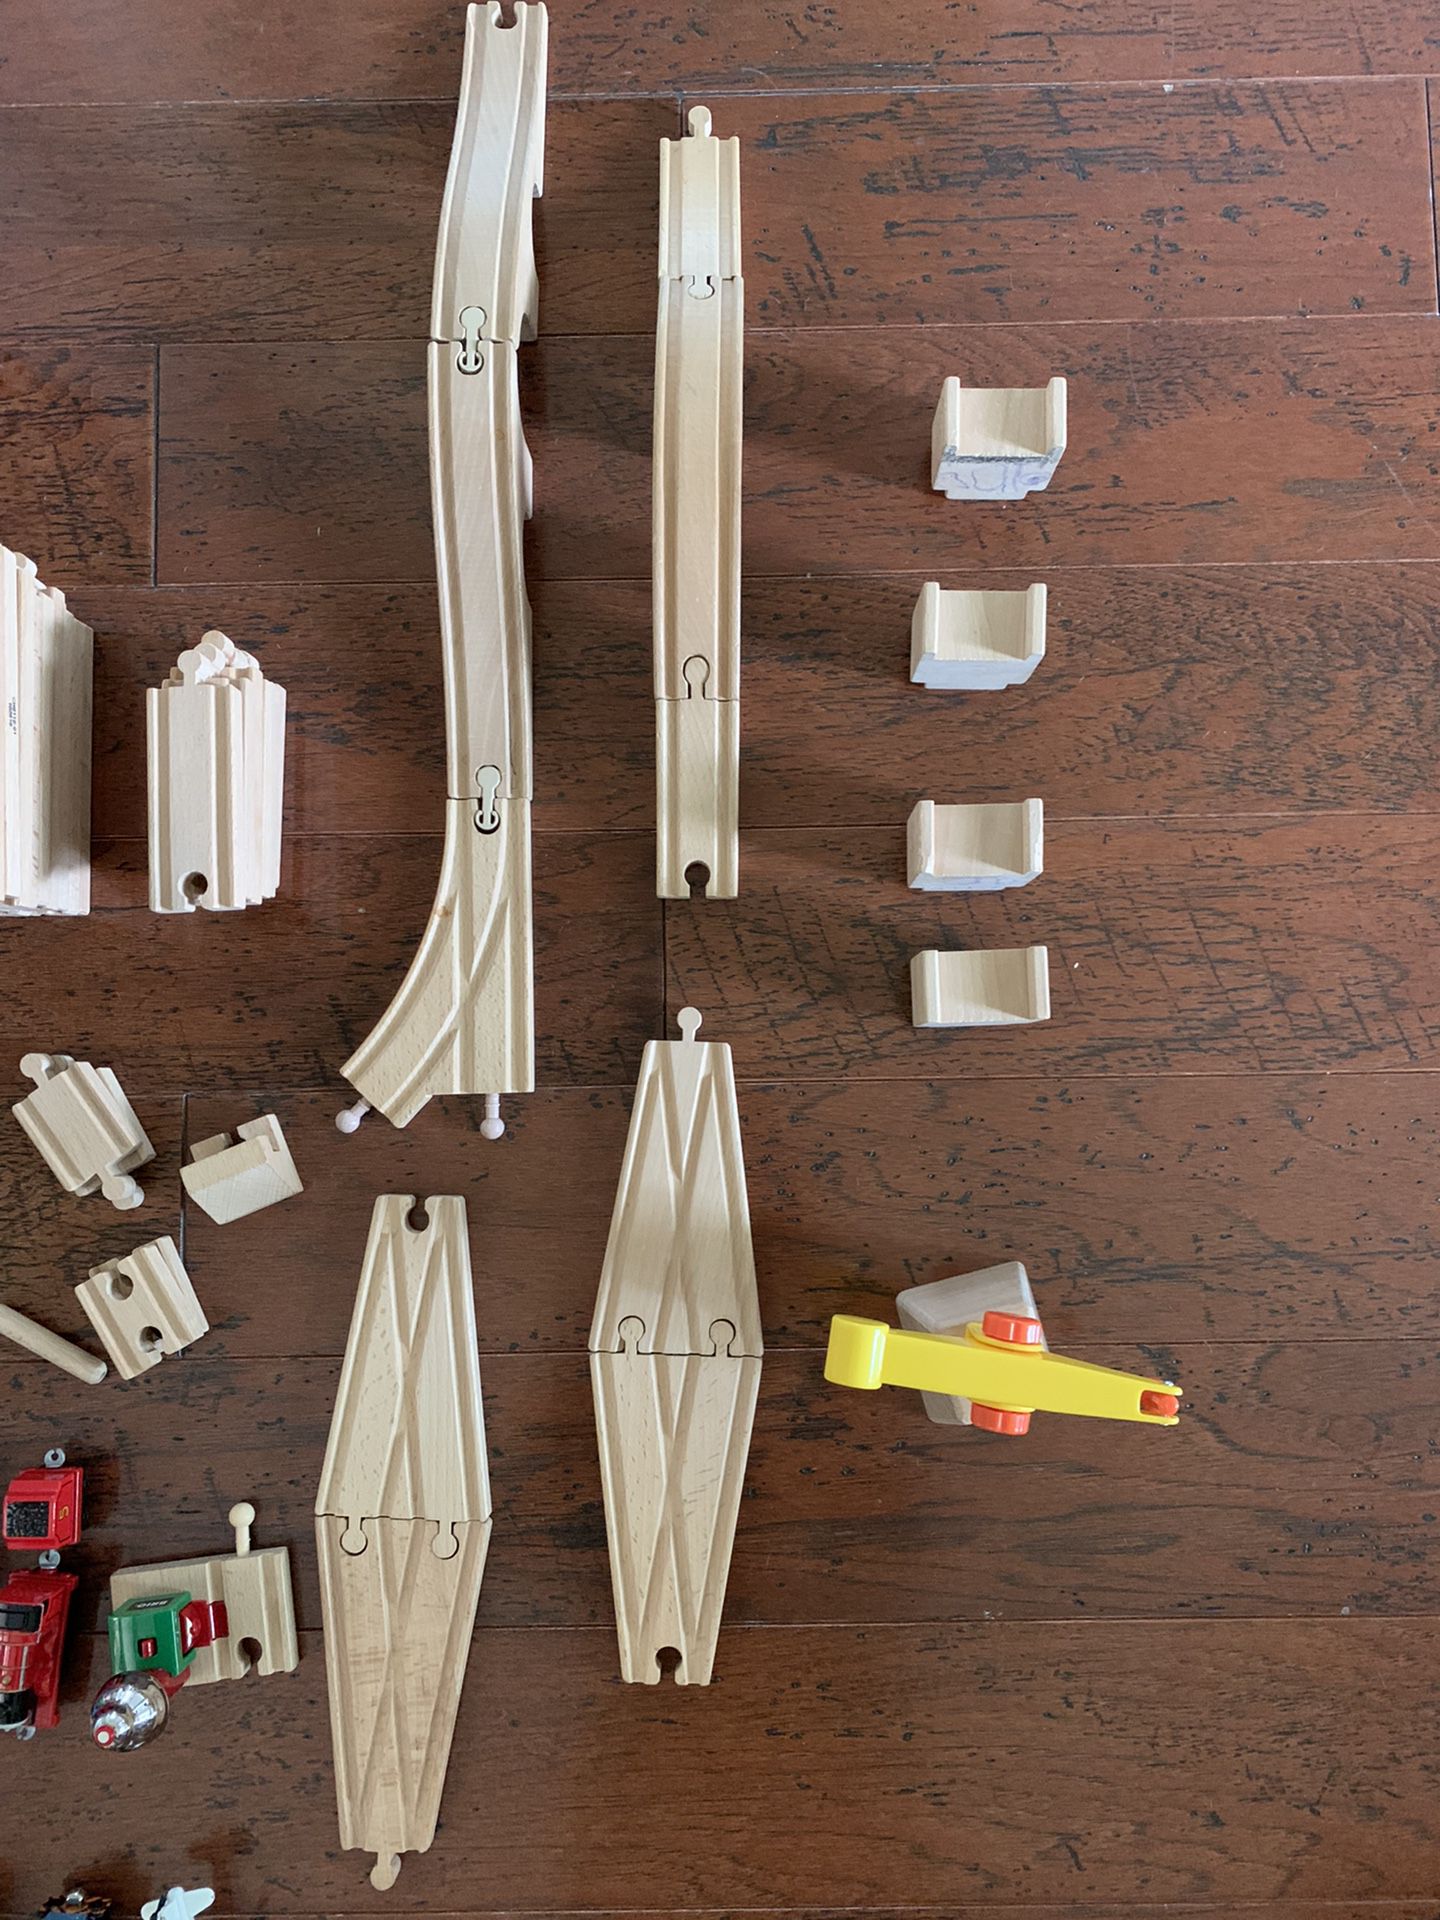 91 Piece, Thomas & Friends, Mellisa & Doug, Ikea Train set Toys  (Cleaned & Sanitized)